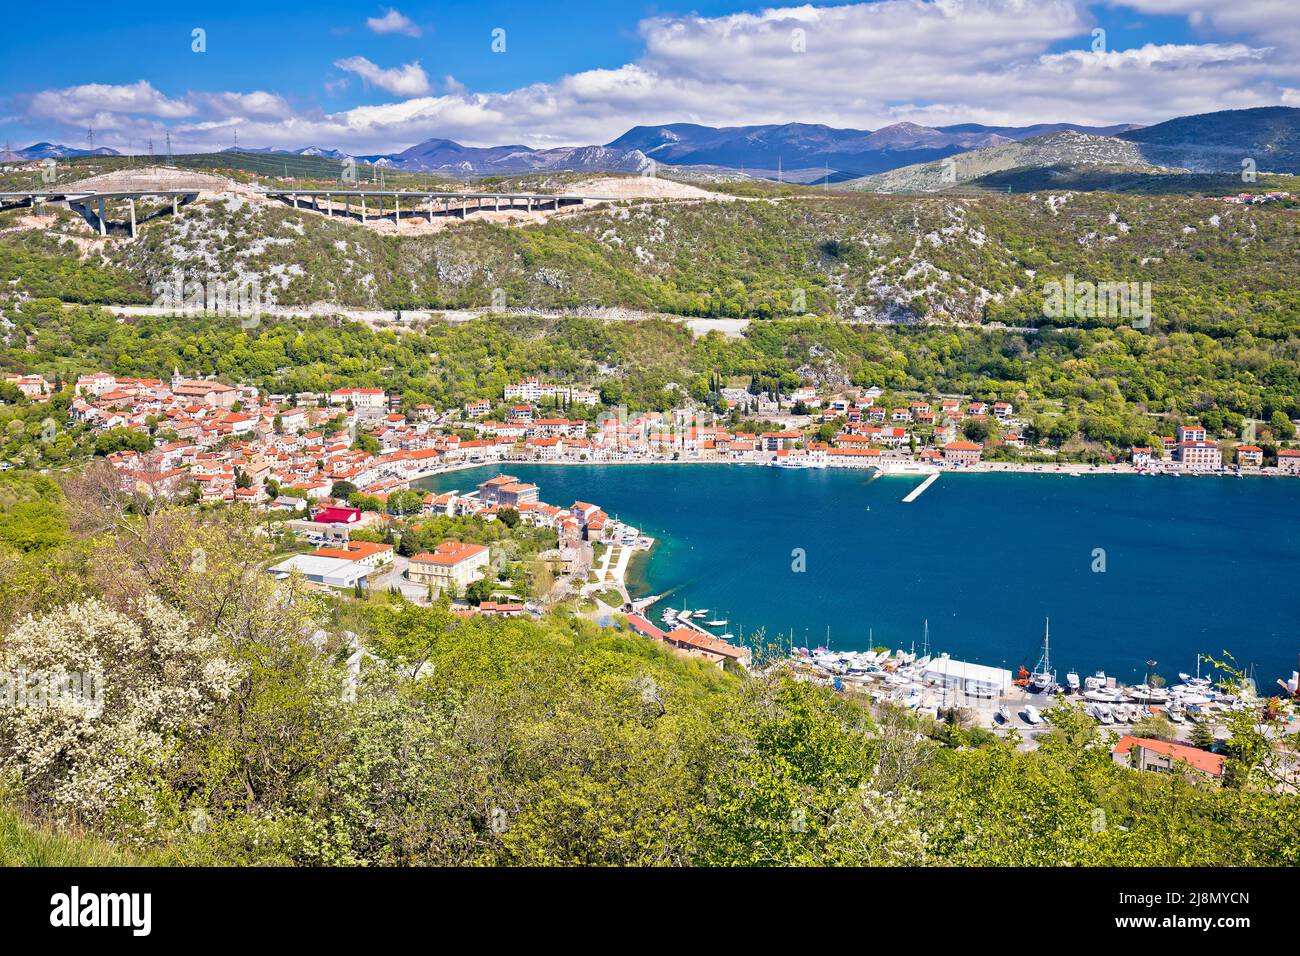 Aerial view of town of Bakar in Kvarner bay area, Adriatic coast of Croatia Stock Photo